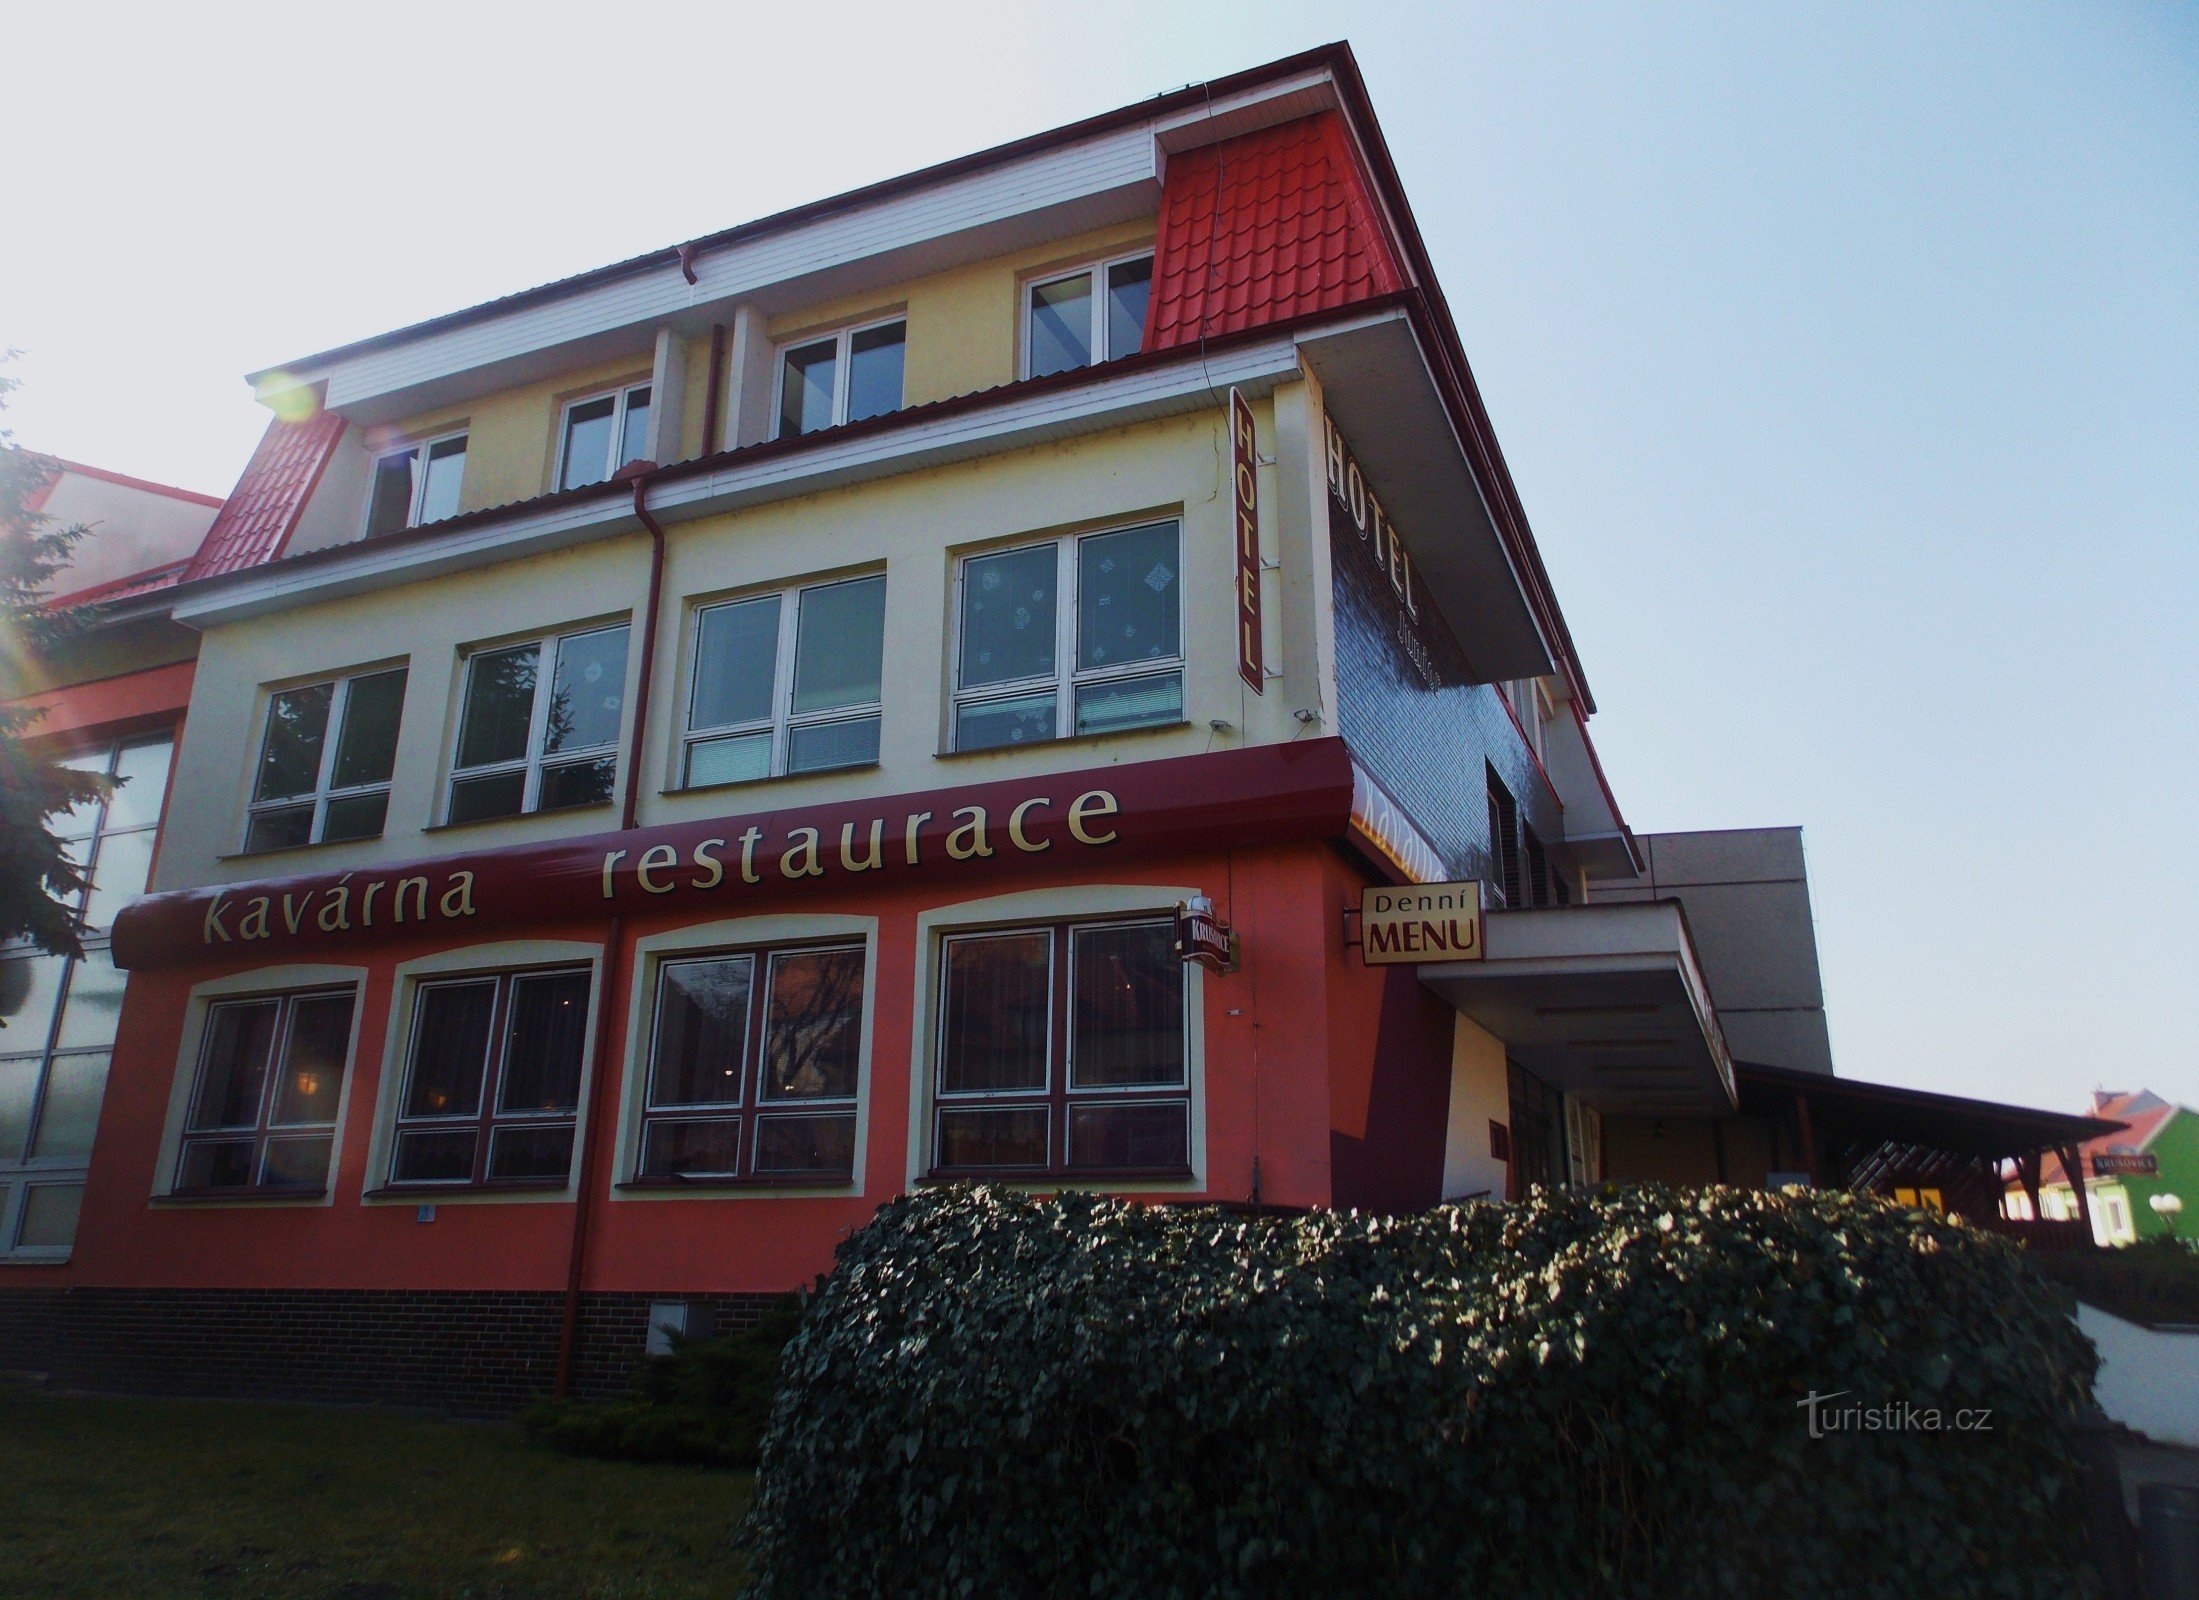 Hotel Junior 在 Bzenci 镇设有餐厅和咖啡厅